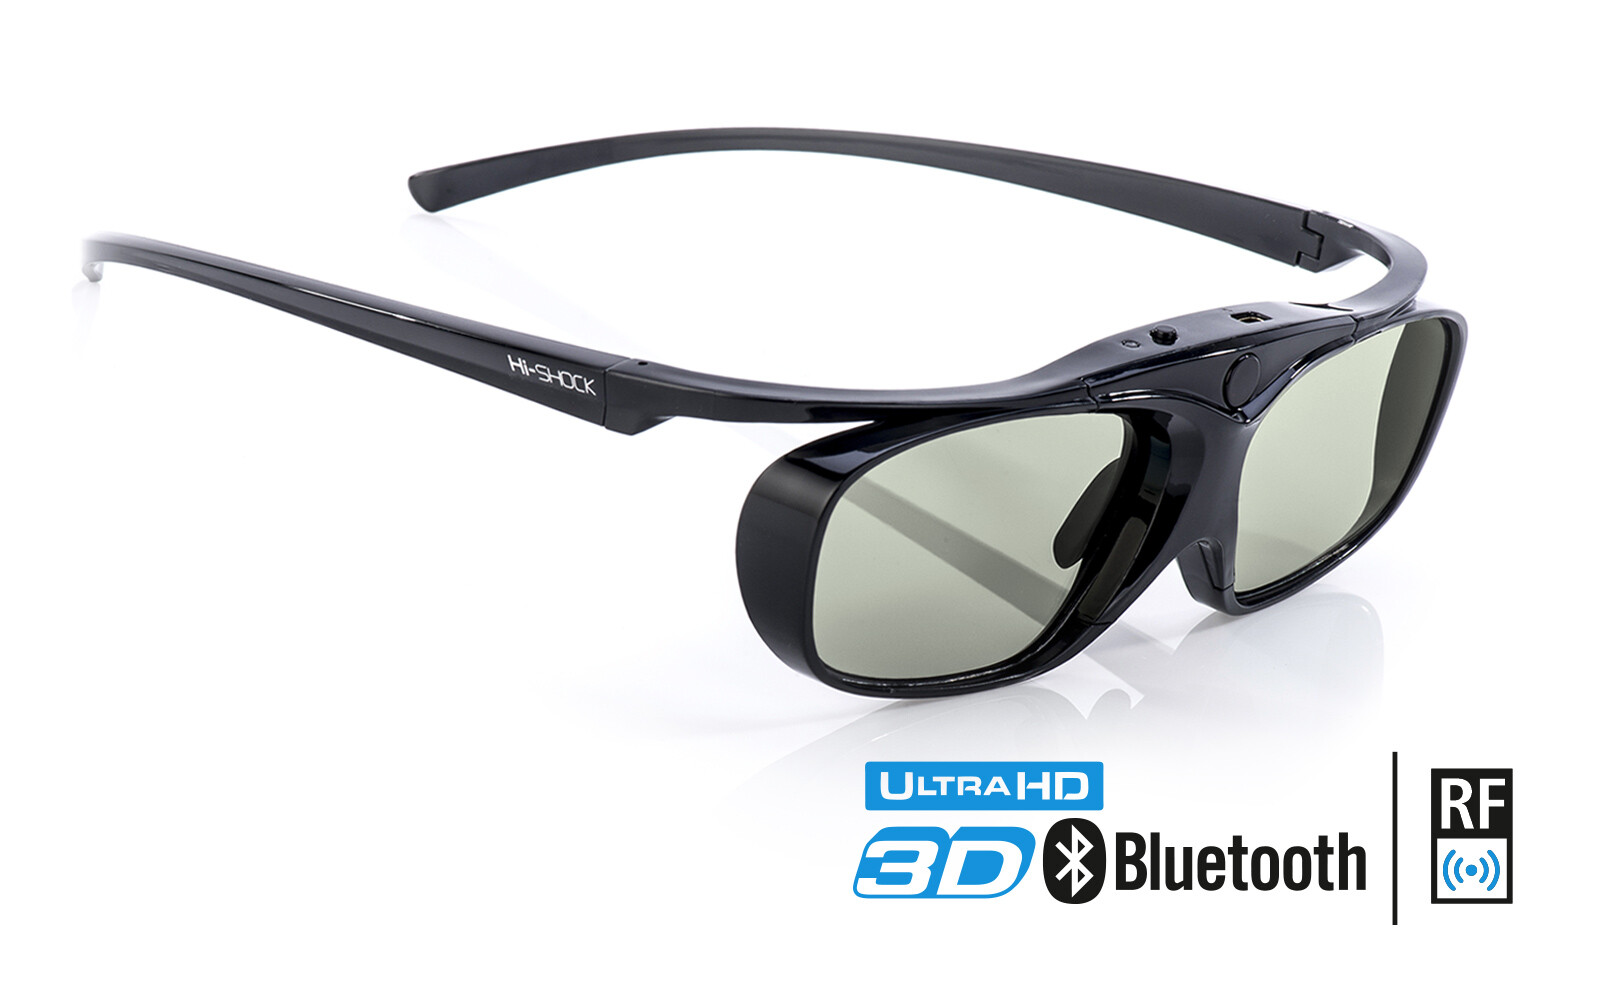 Hi-SHOCK Black Aktive 3D Brille - RF/Bluetooth | EDU.de